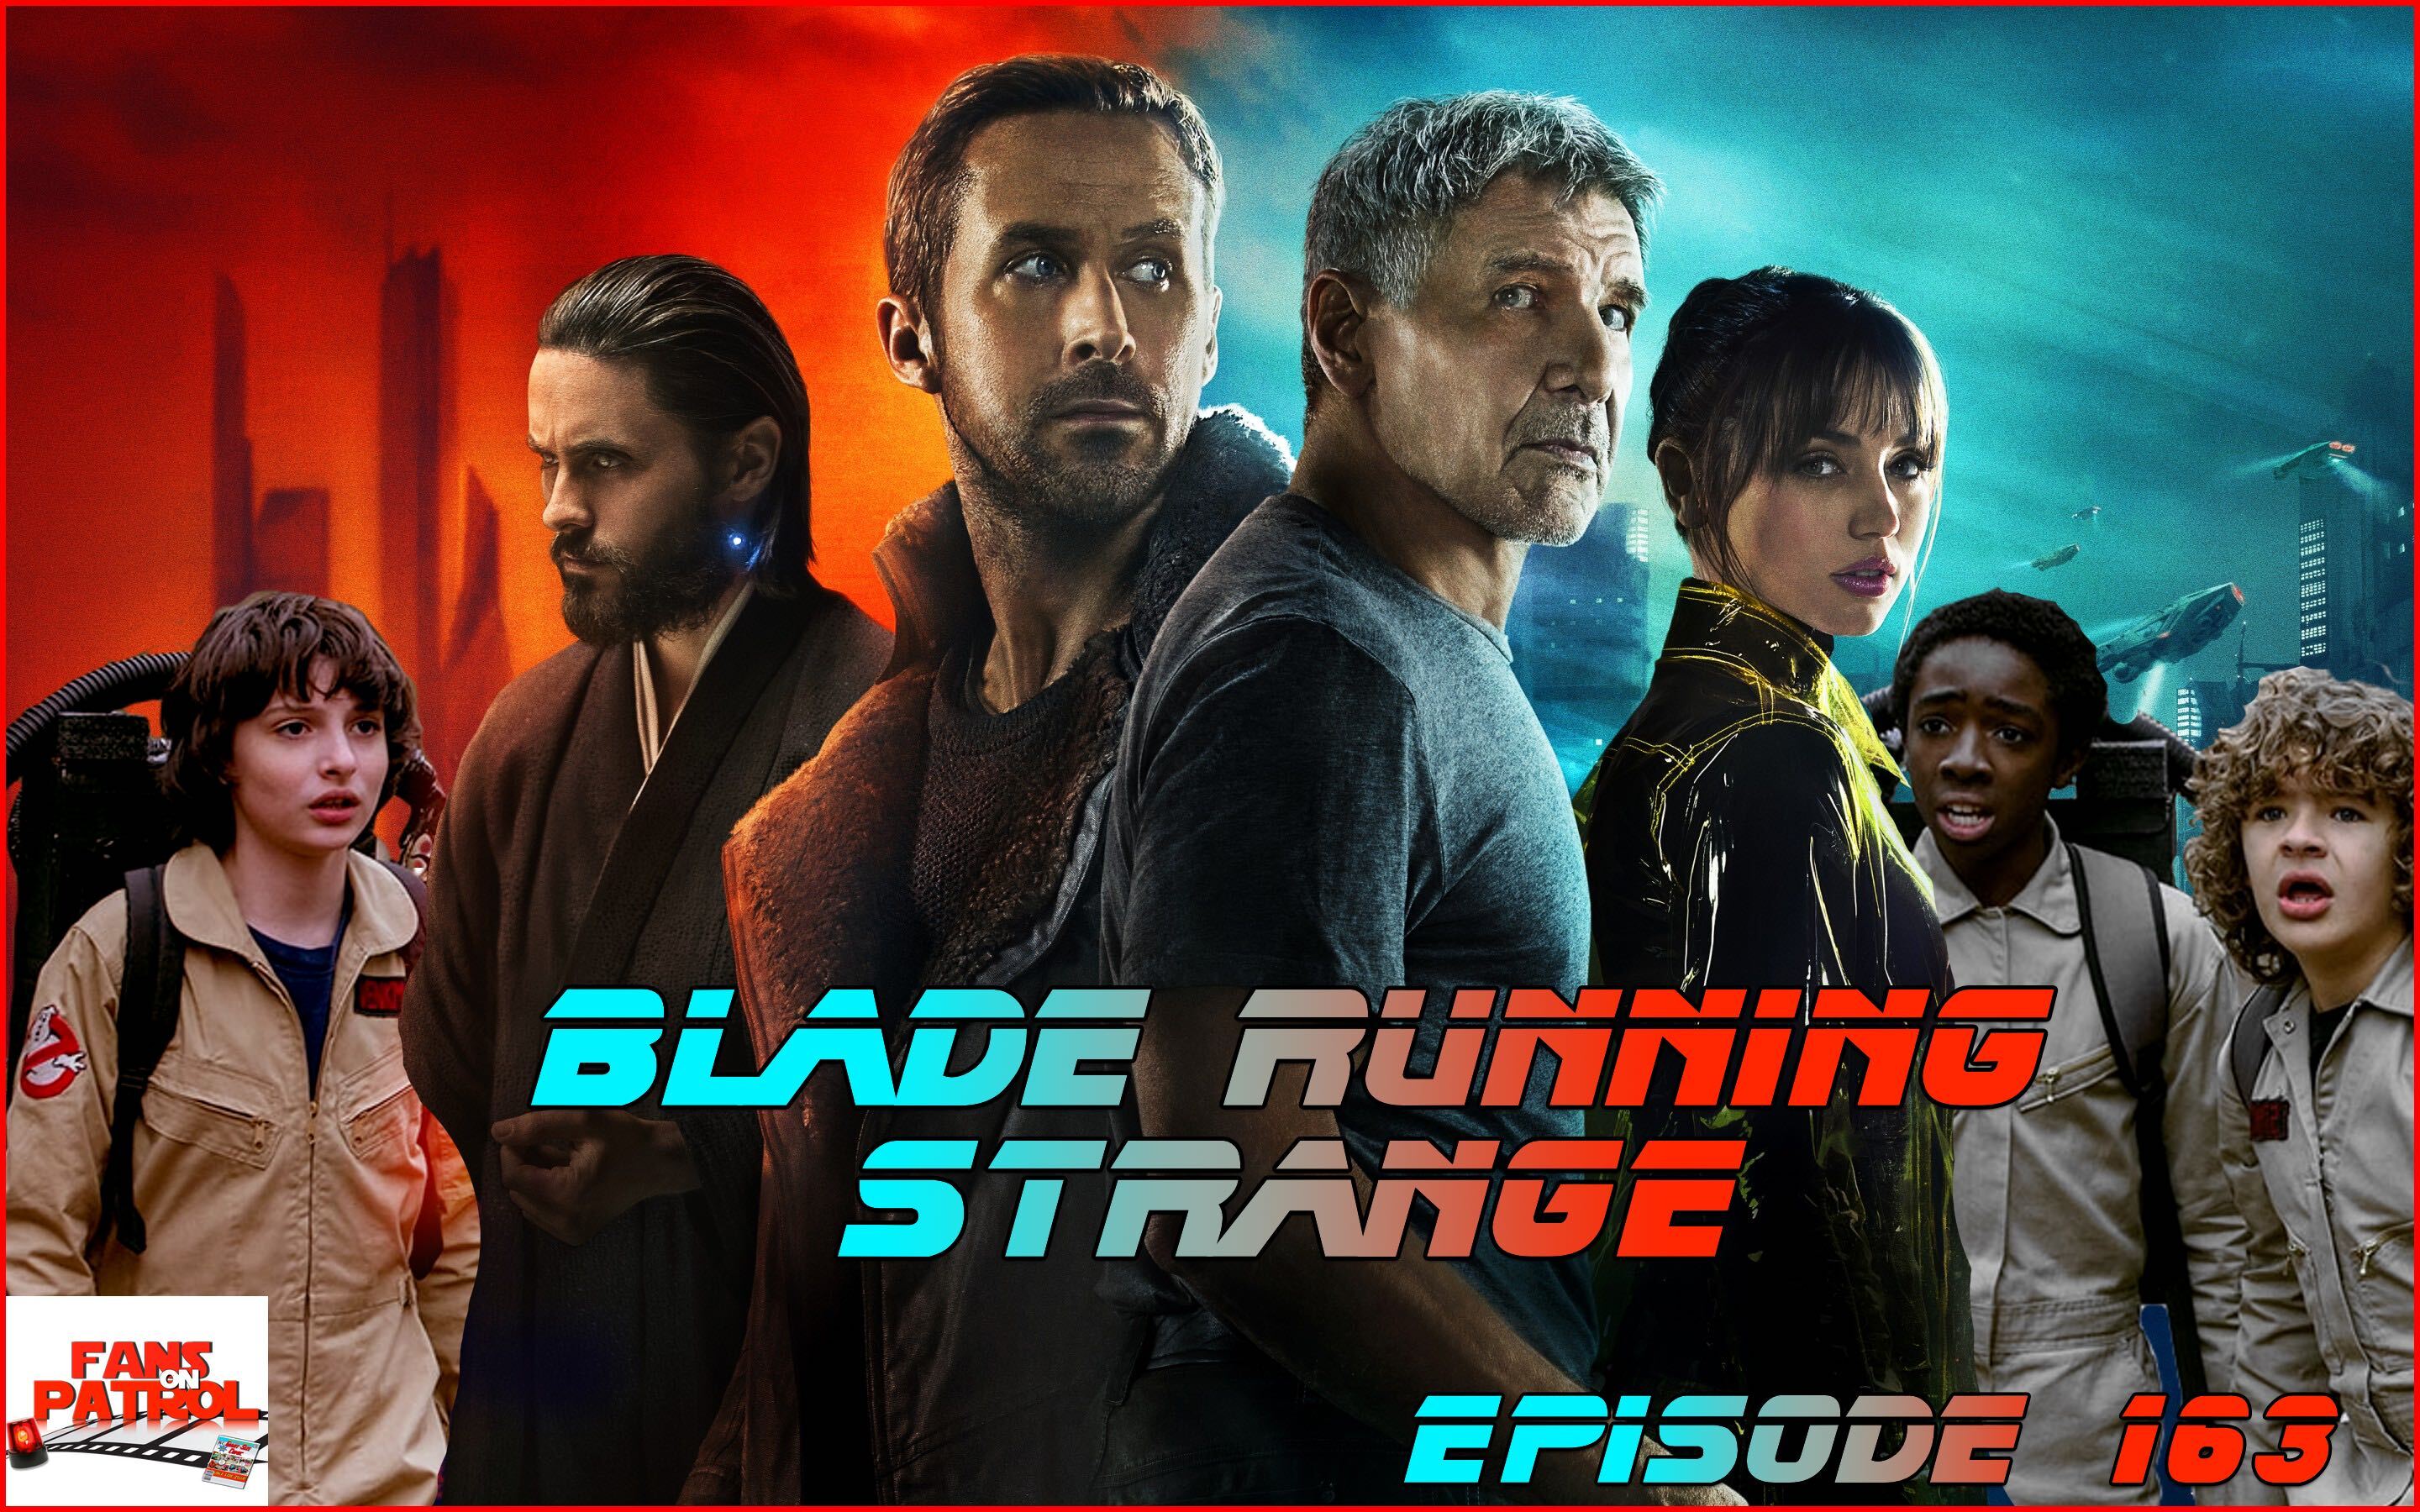 Blade Running Strange Episode 163